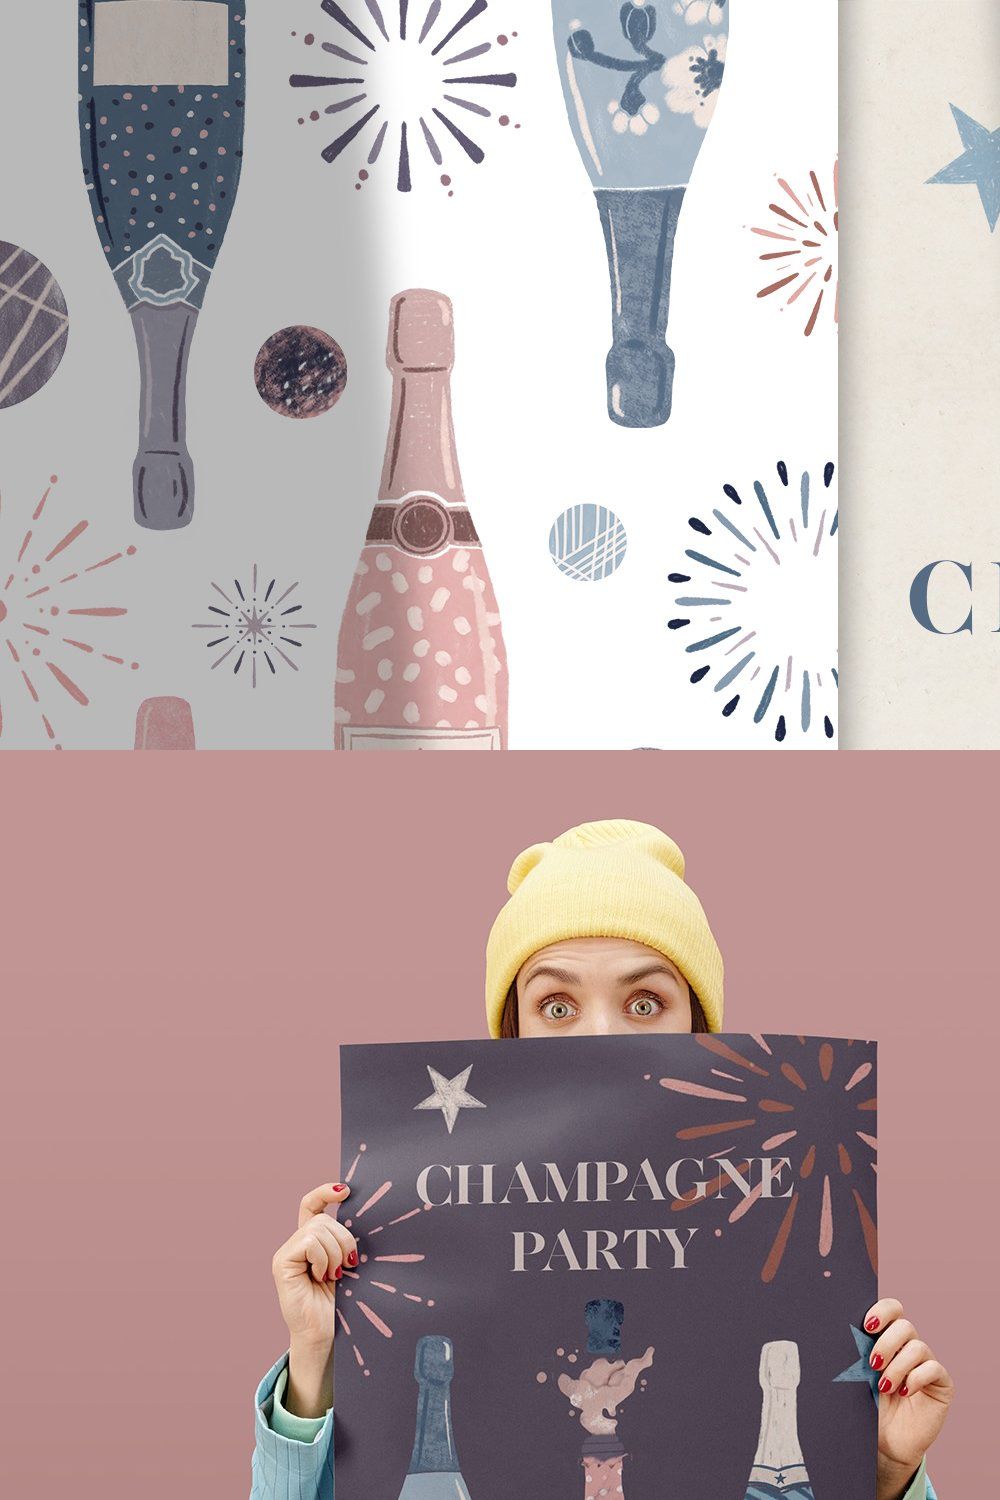 Champagne Celebration Clipart pinterest preview image.